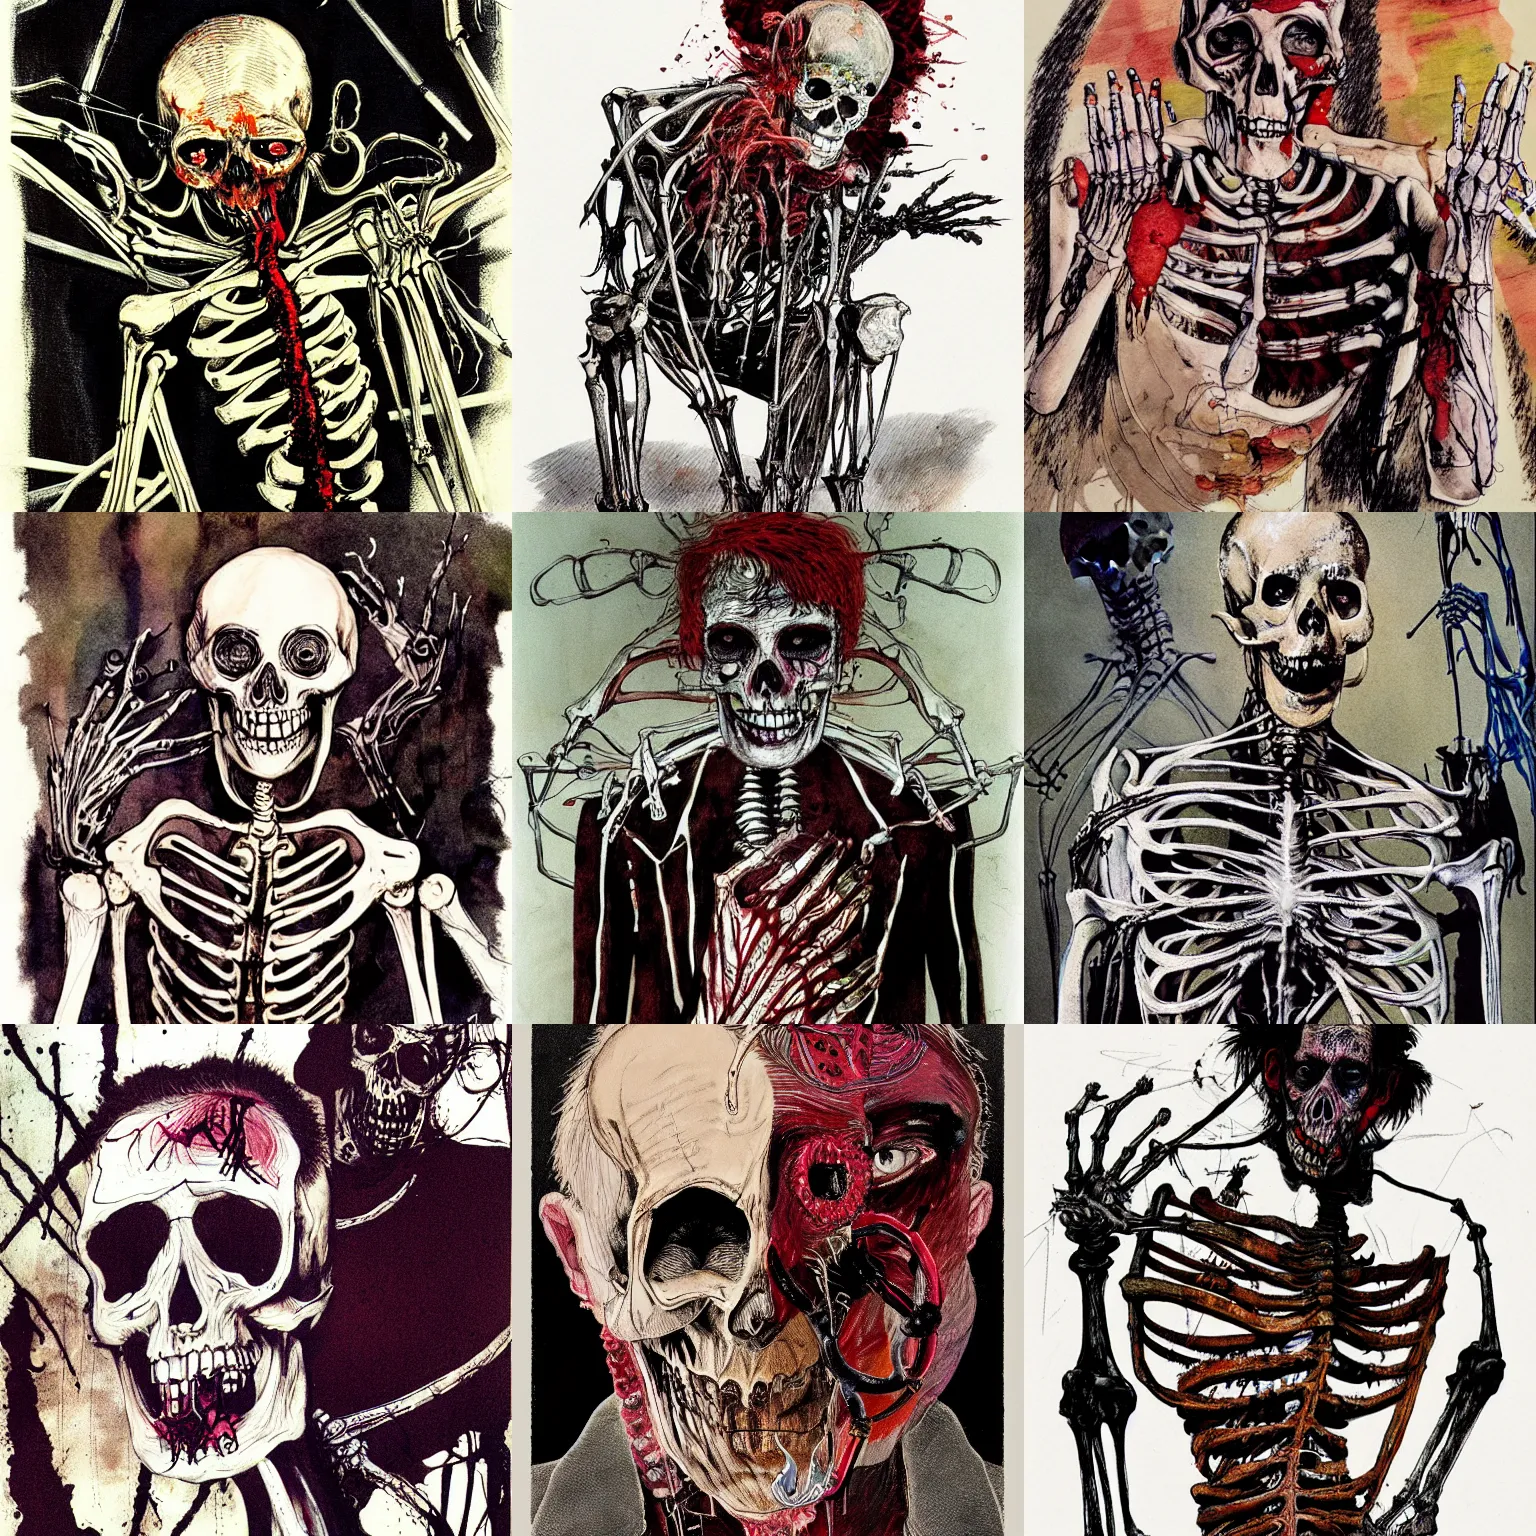 Prompt: Graphic Illustration, Creative Design, Skeleton, Biopunk, Body Horror, Full Body Portrait, Character Design, by Ralph Steadman, Francis Bacon, Hunter S Thompson